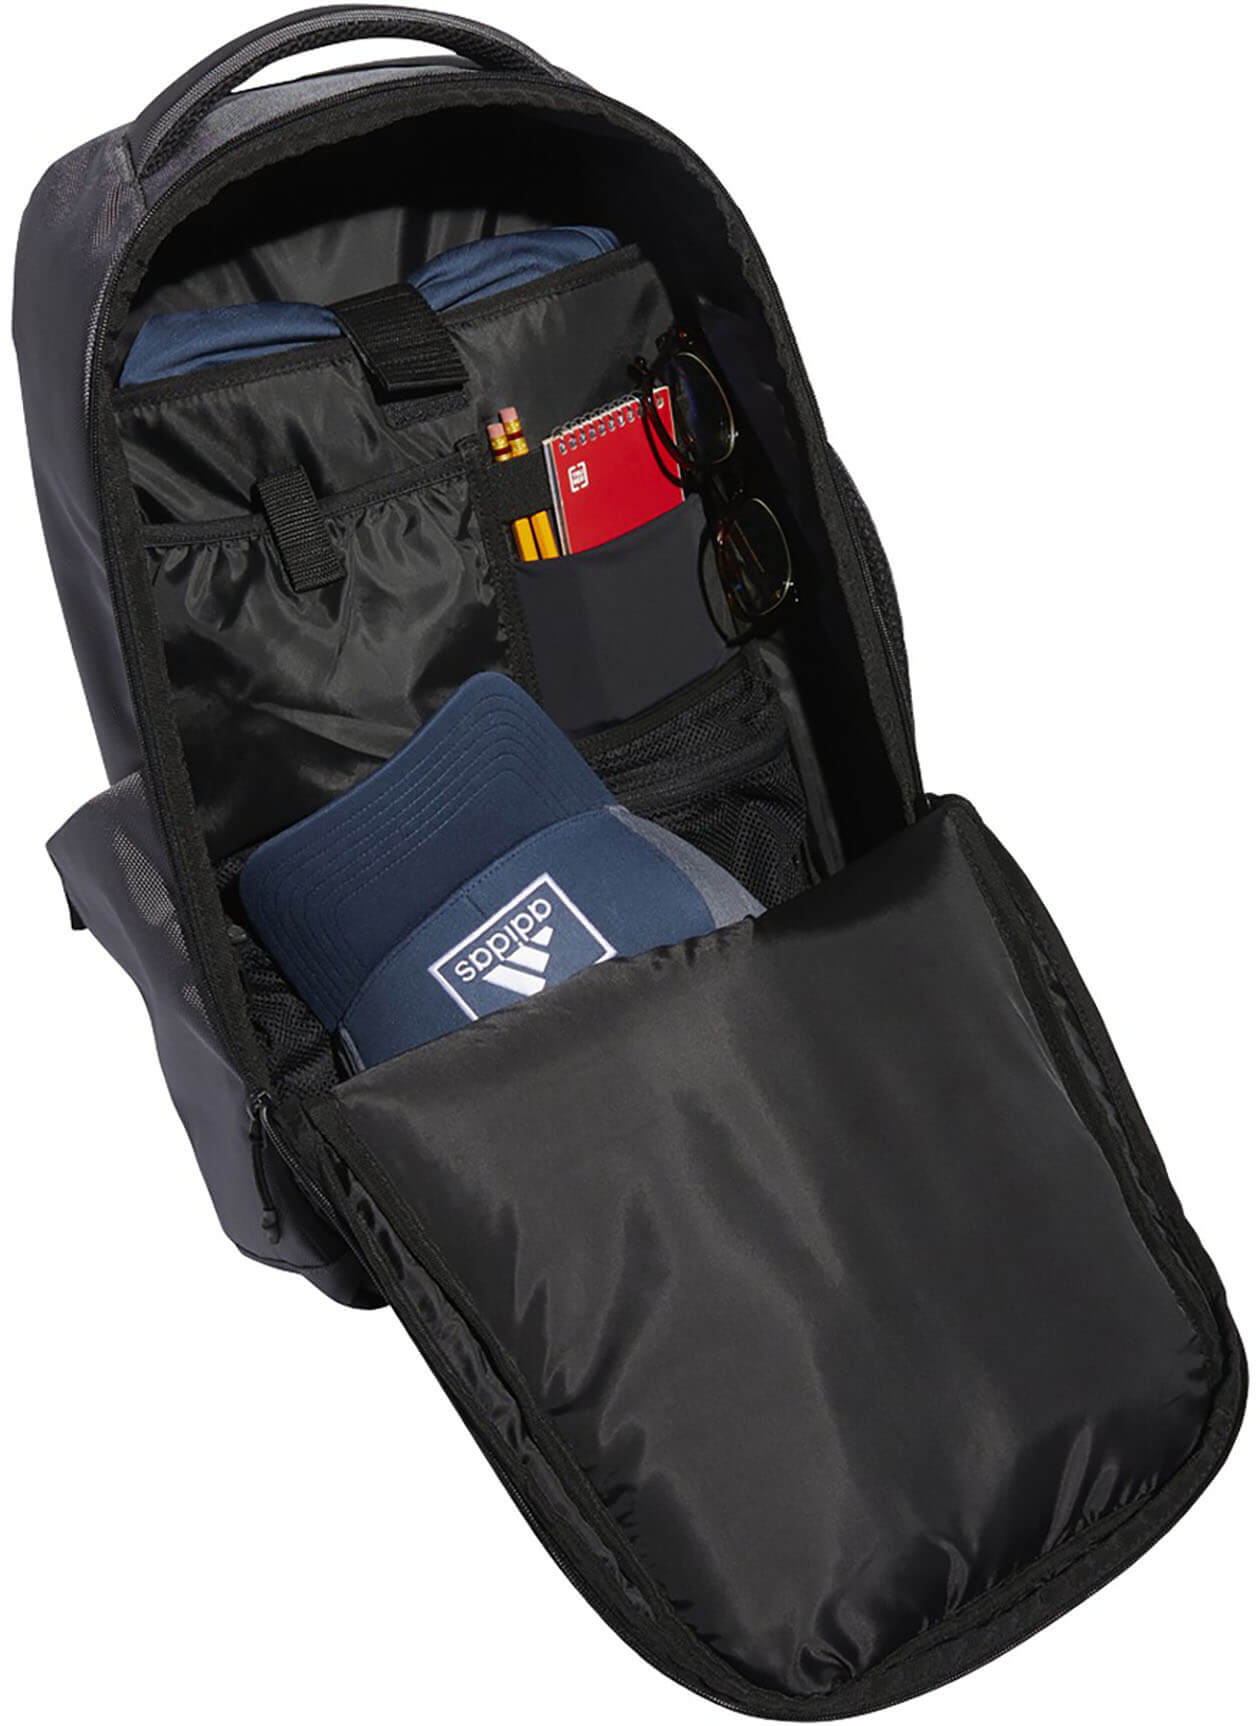 Adidas AD303 - Golf Premium Backpack